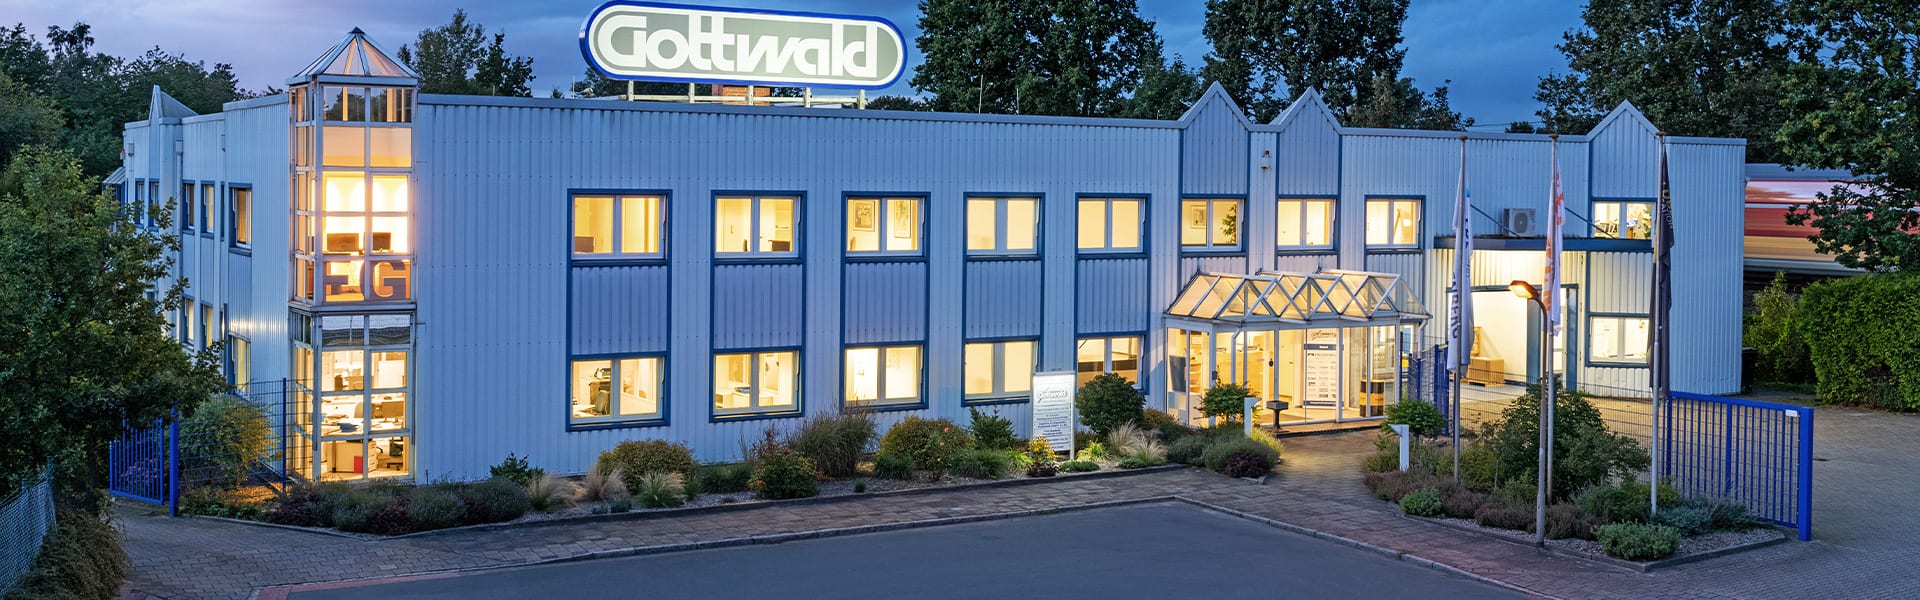 Franz Gottwald GmbH + Co. KG